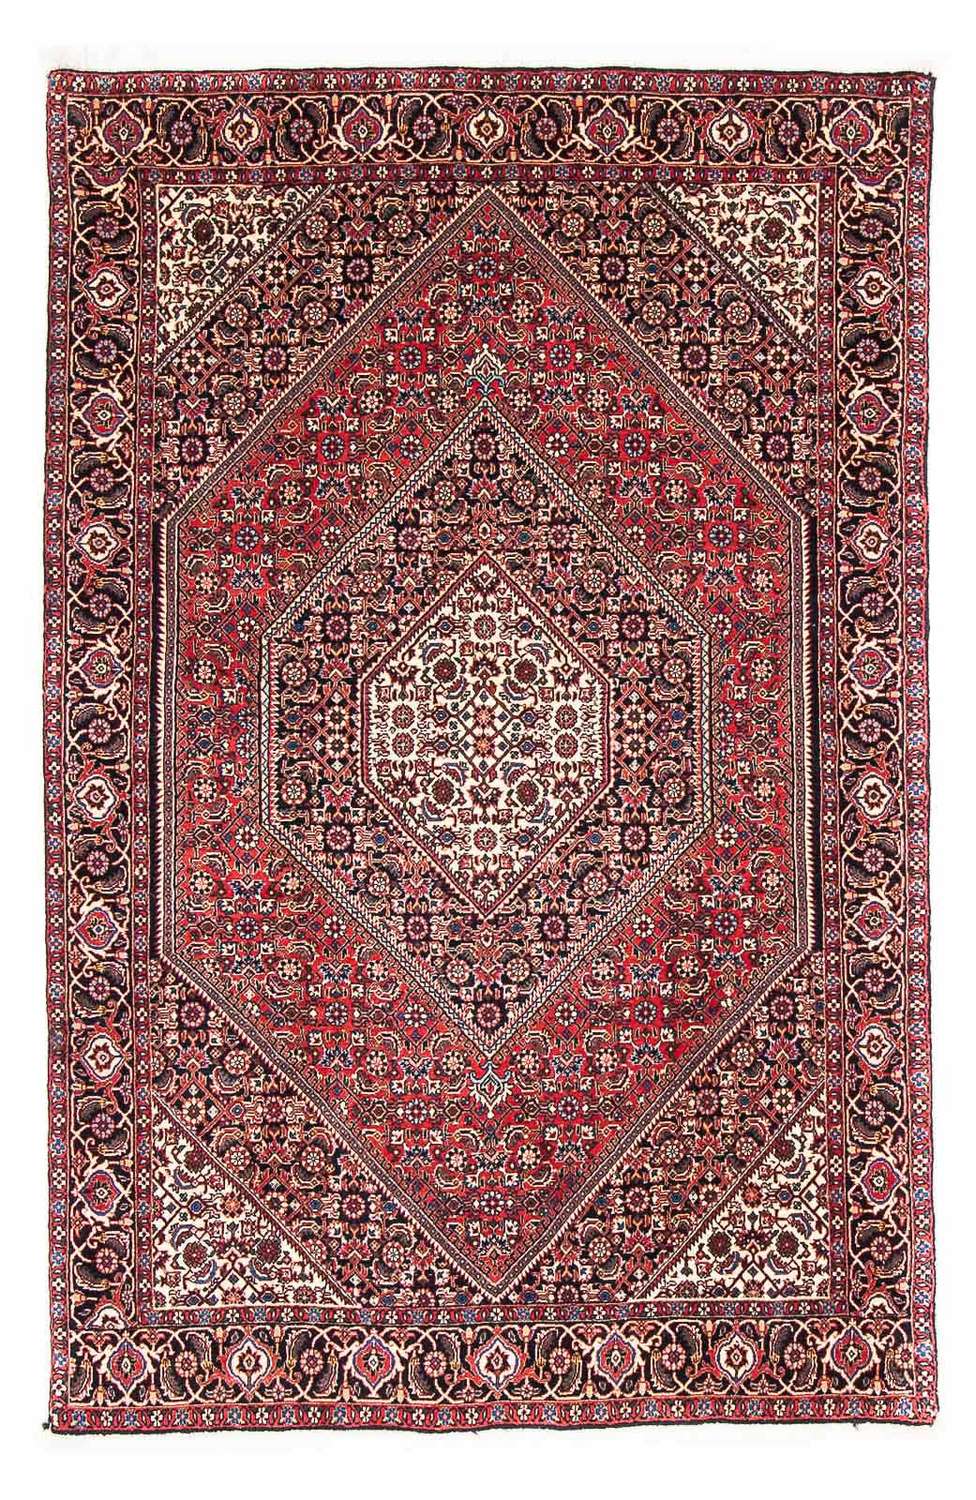 Tapis persan - Bidjar - 170 x 110 cm - rouge